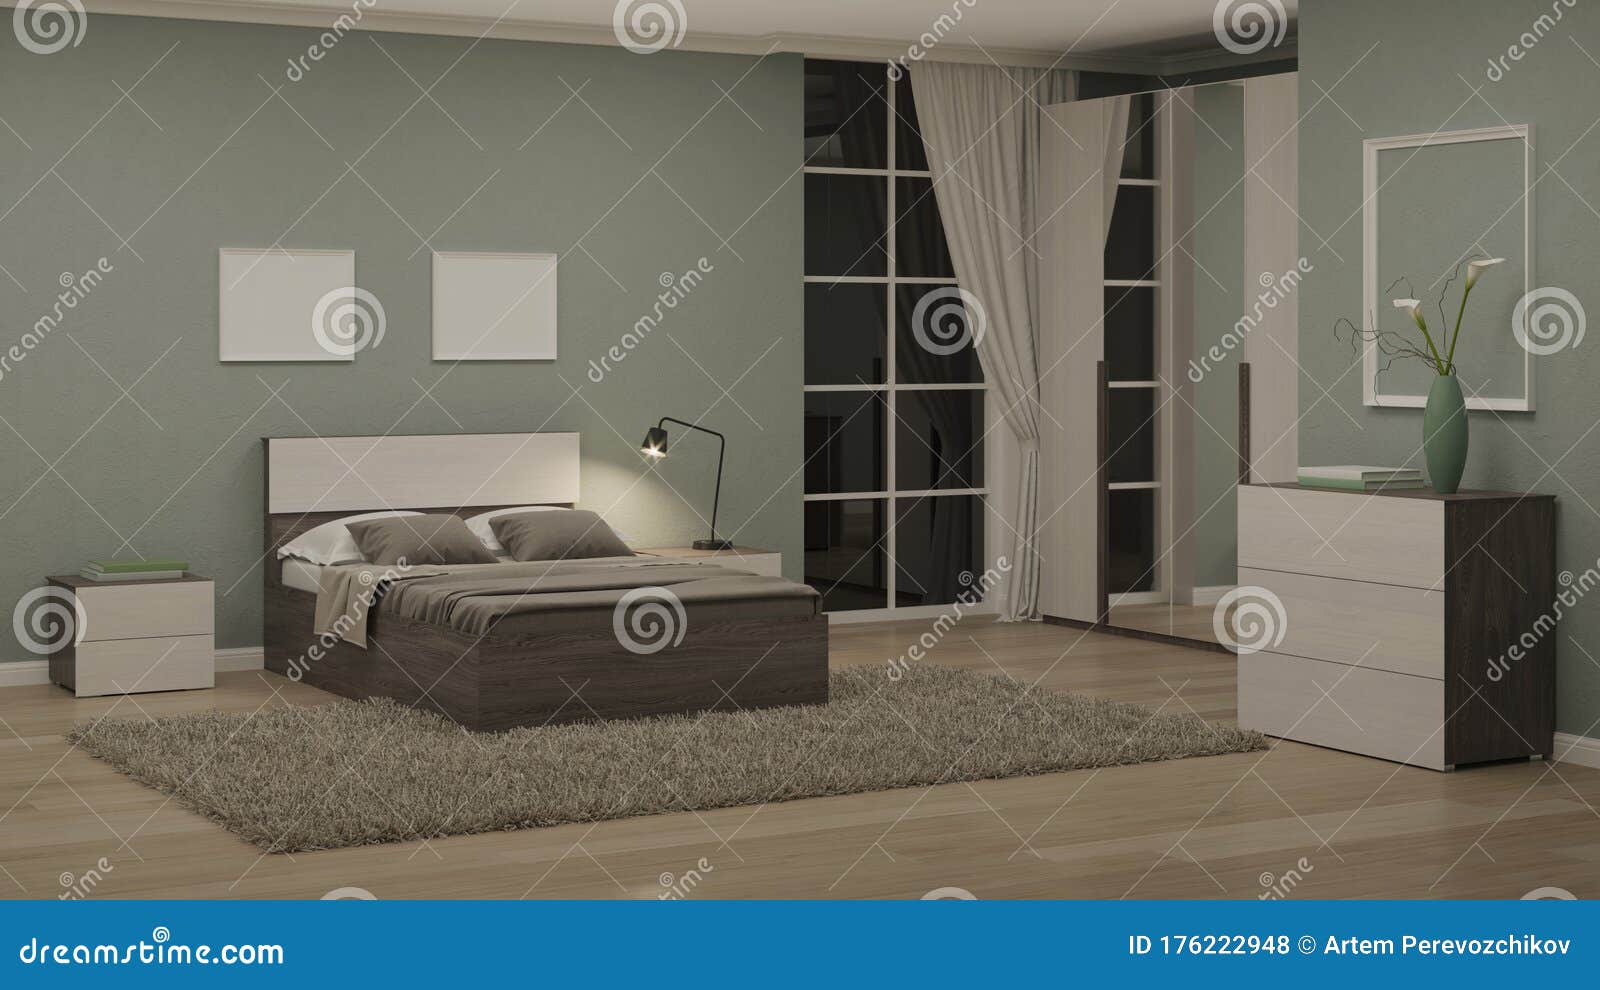 Modern Interior Of A Bedroom With Light Green Walls Night